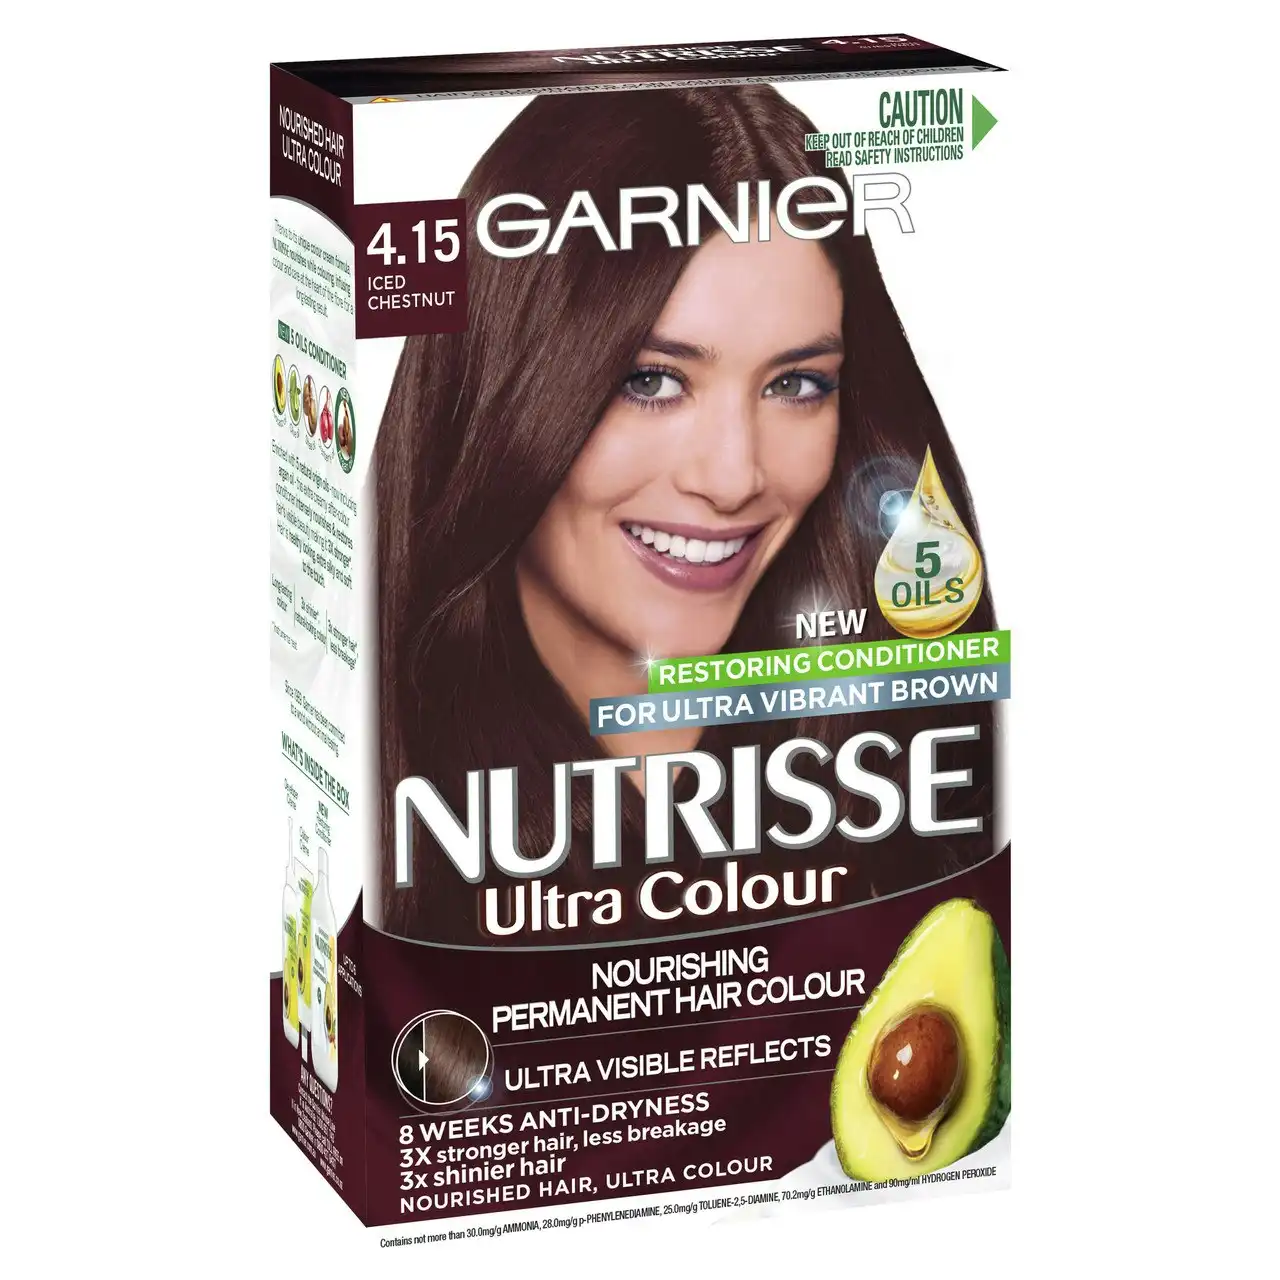 Garnier NutrisseUltra Colour Permanent Hair Colour - 4.15 Iced Chestnut